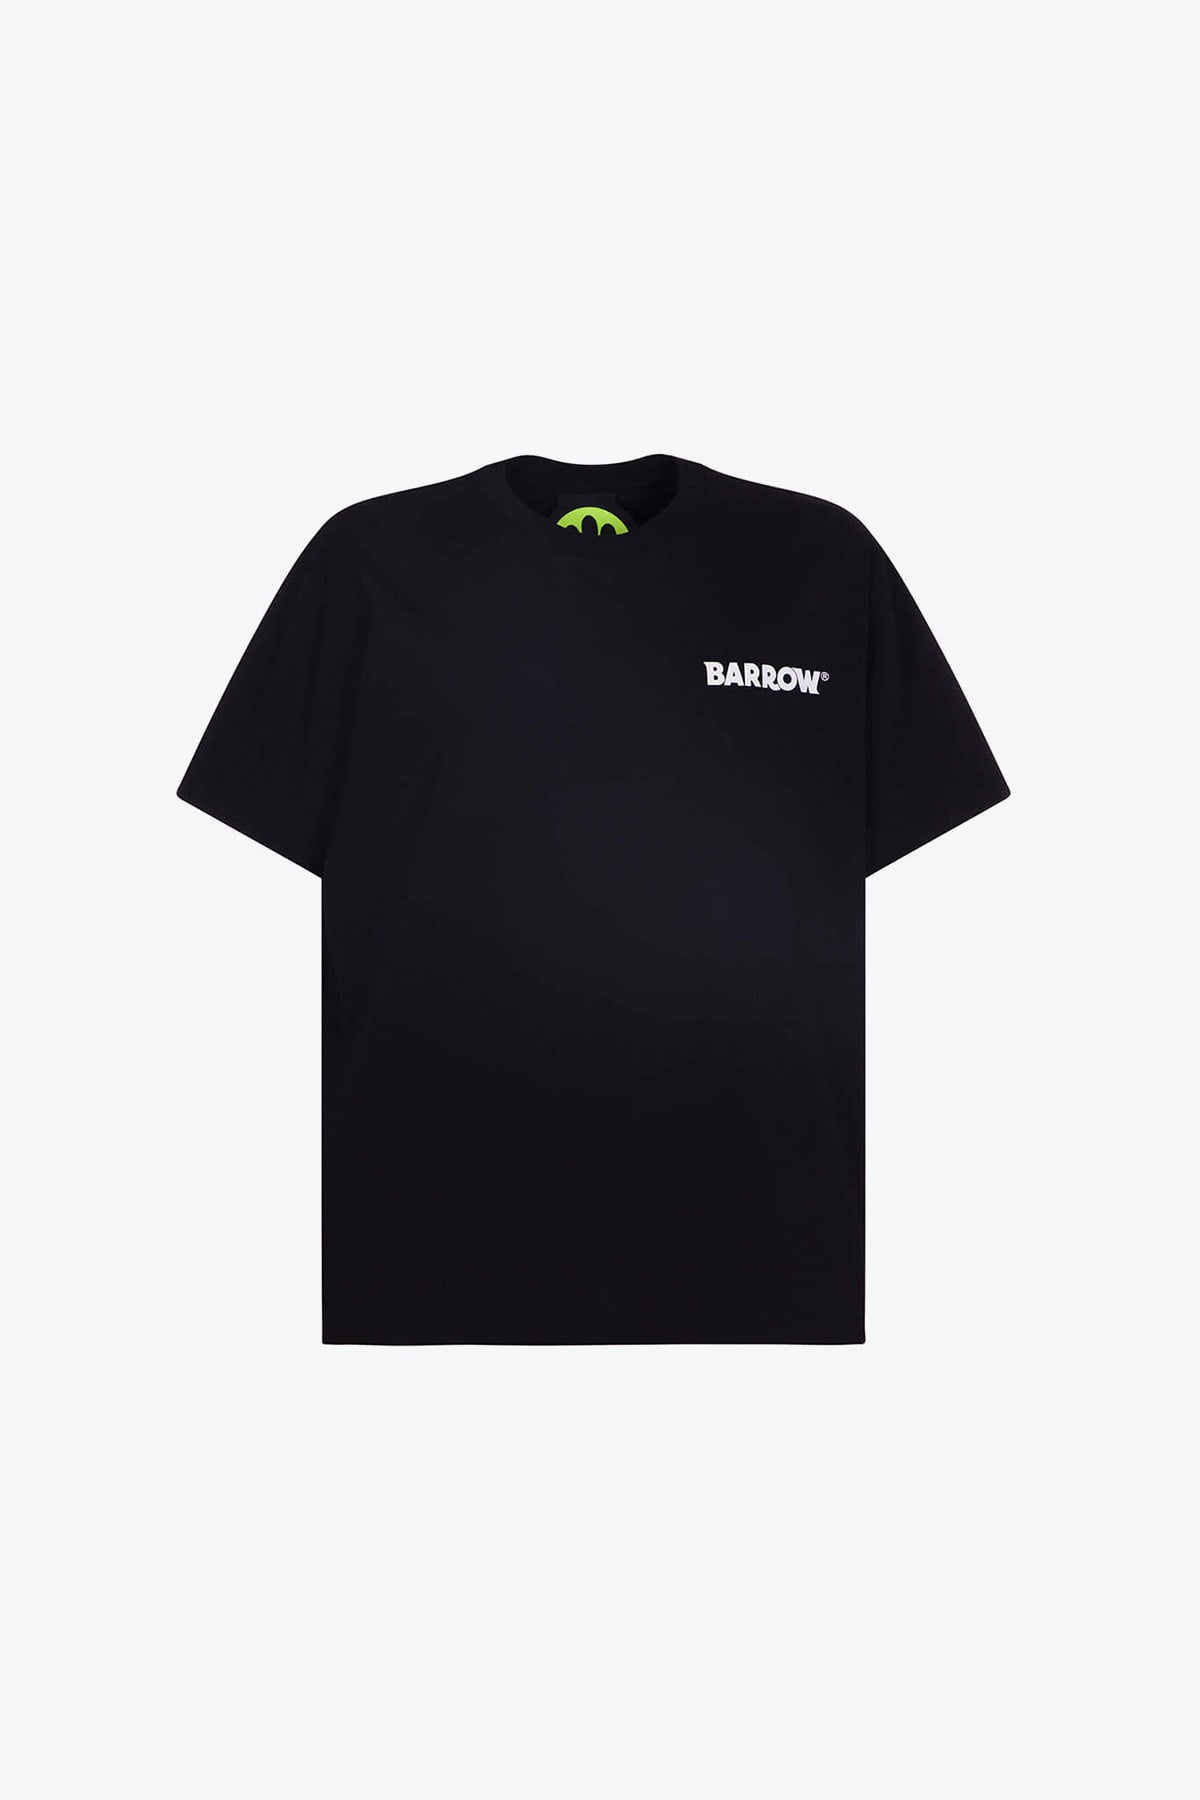 Barrow T-shirt Jersey Unisex Black cotton t-shirt with back print